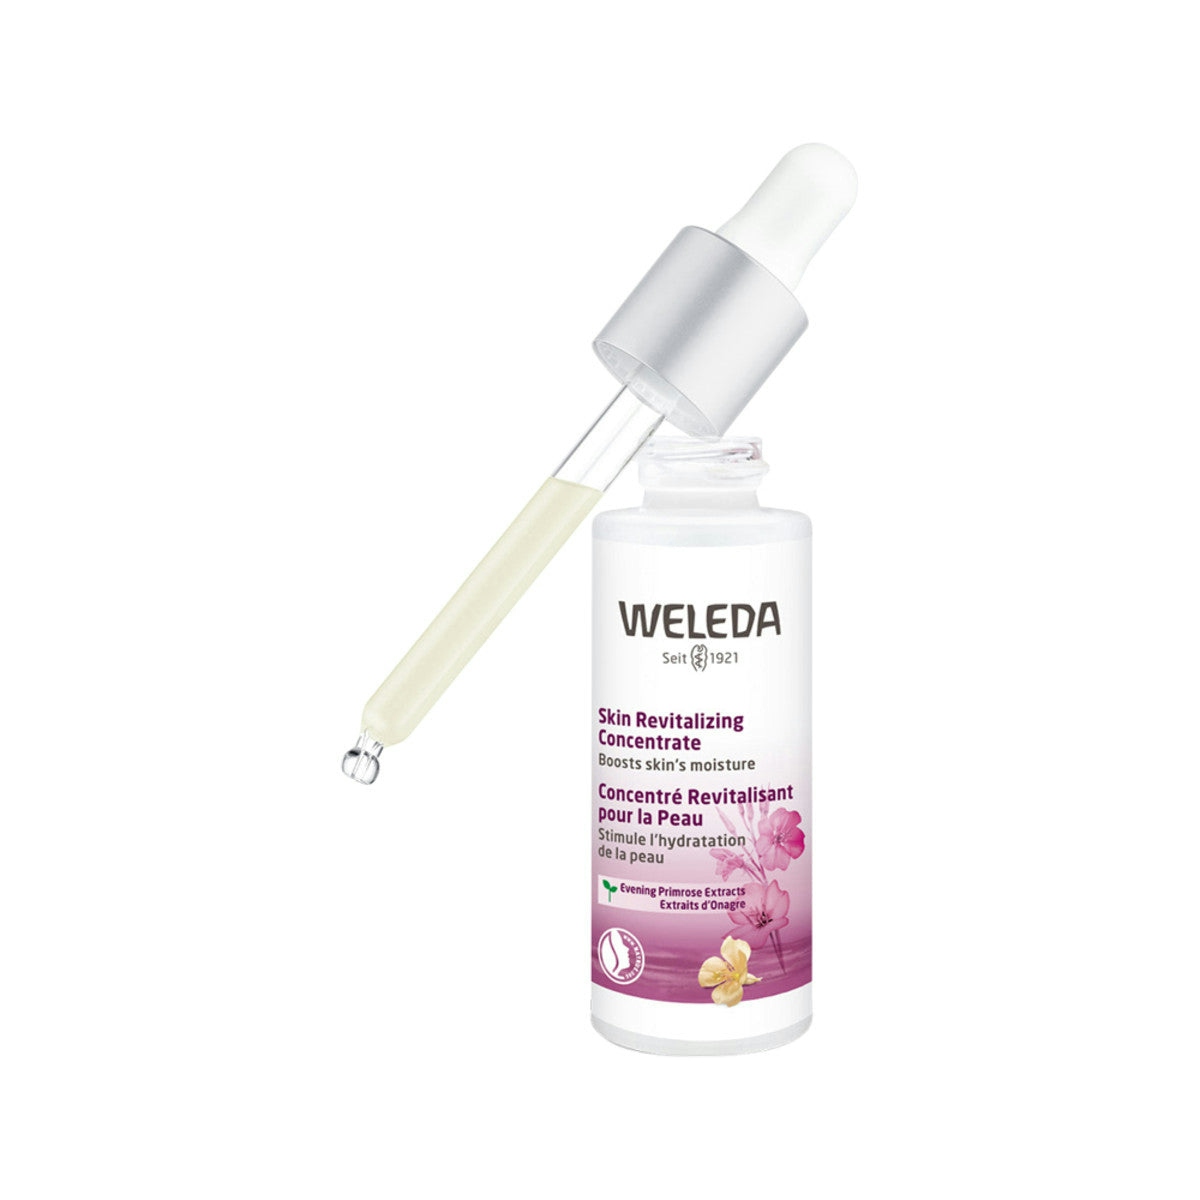 image of Weleda Concentrate Evening Primrose Skin Revitalizing 30ml on white background